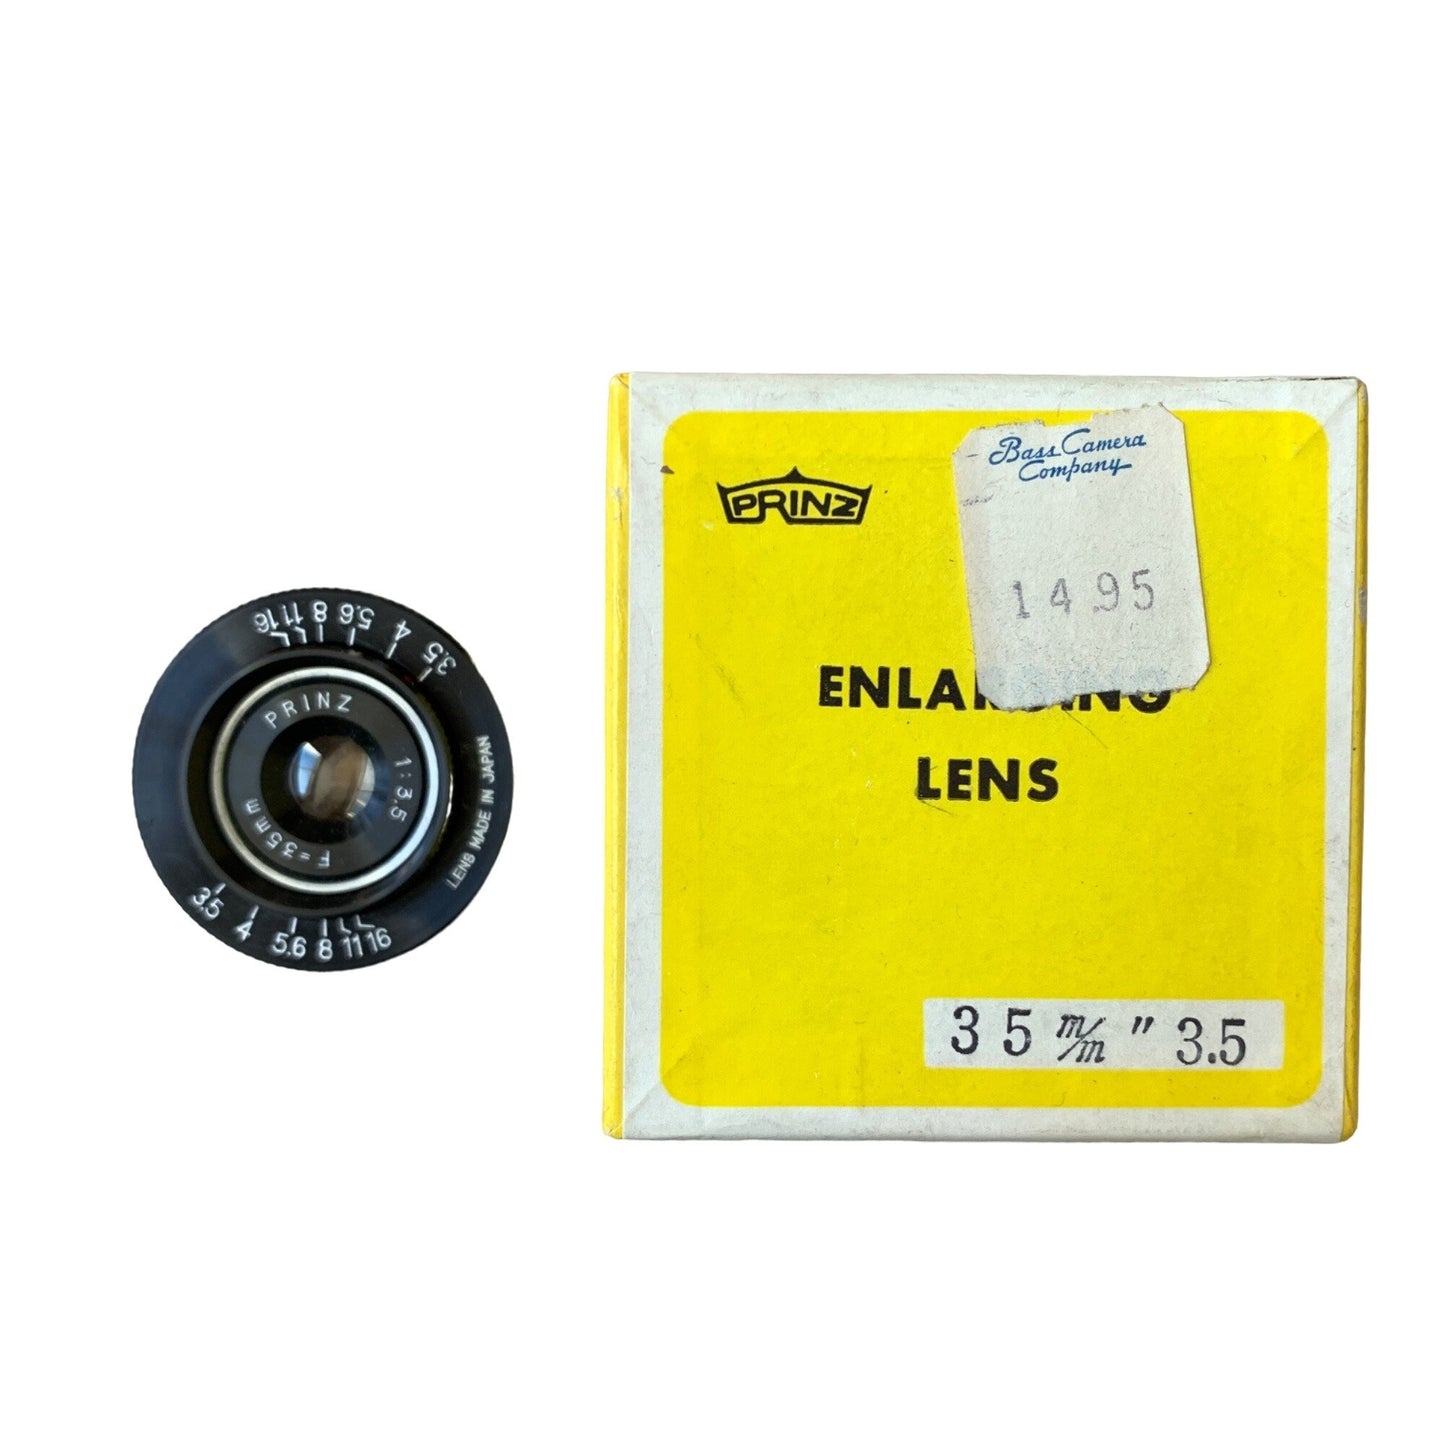 Prinz Enlarging Lens 115-56 35mm 3.5 In box